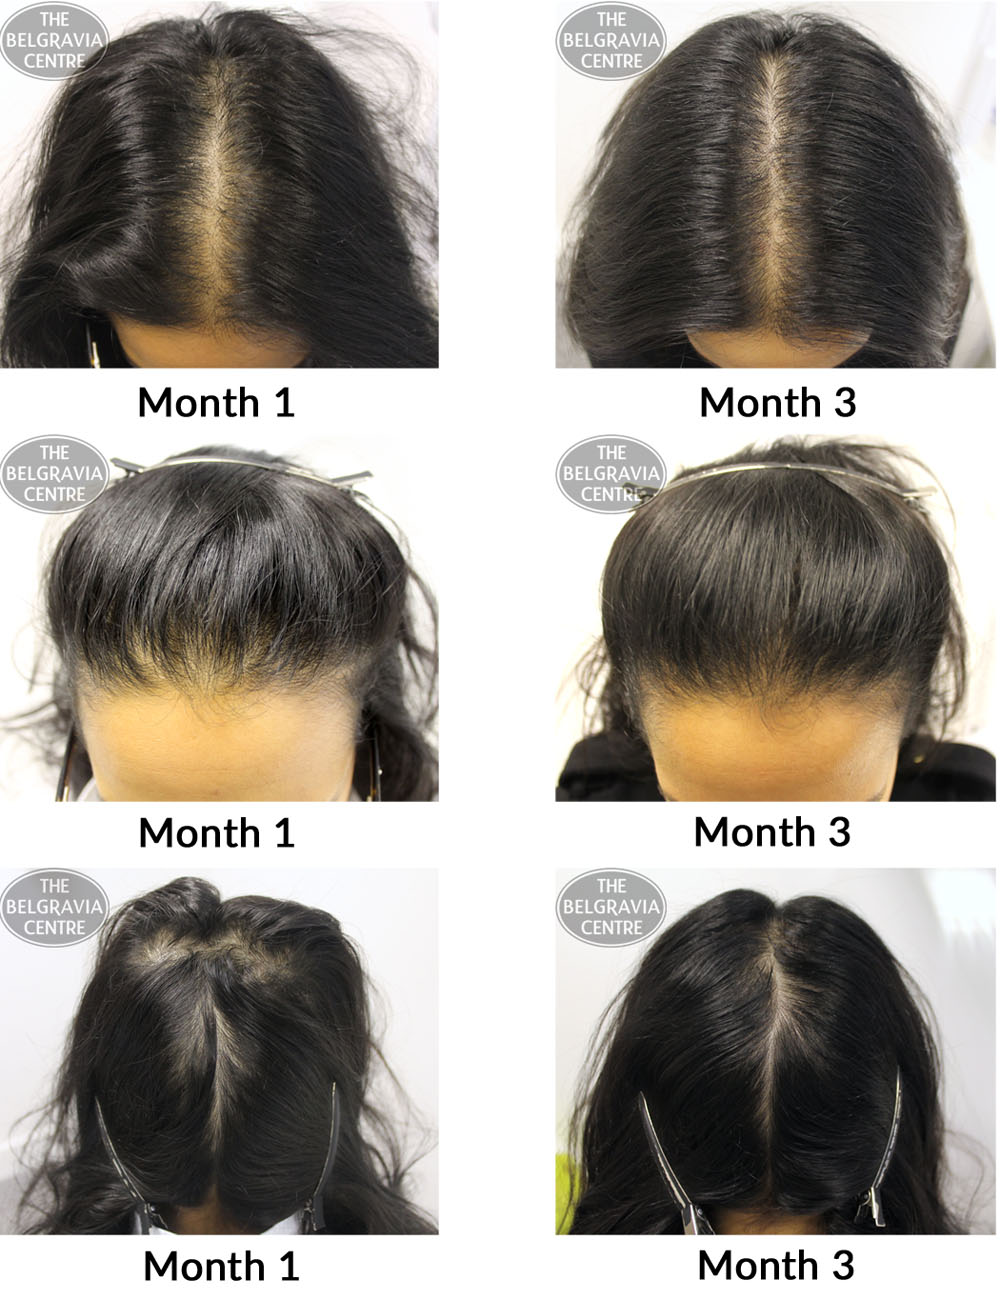 female pattern hair loss the belgravia centre 06 03 2017